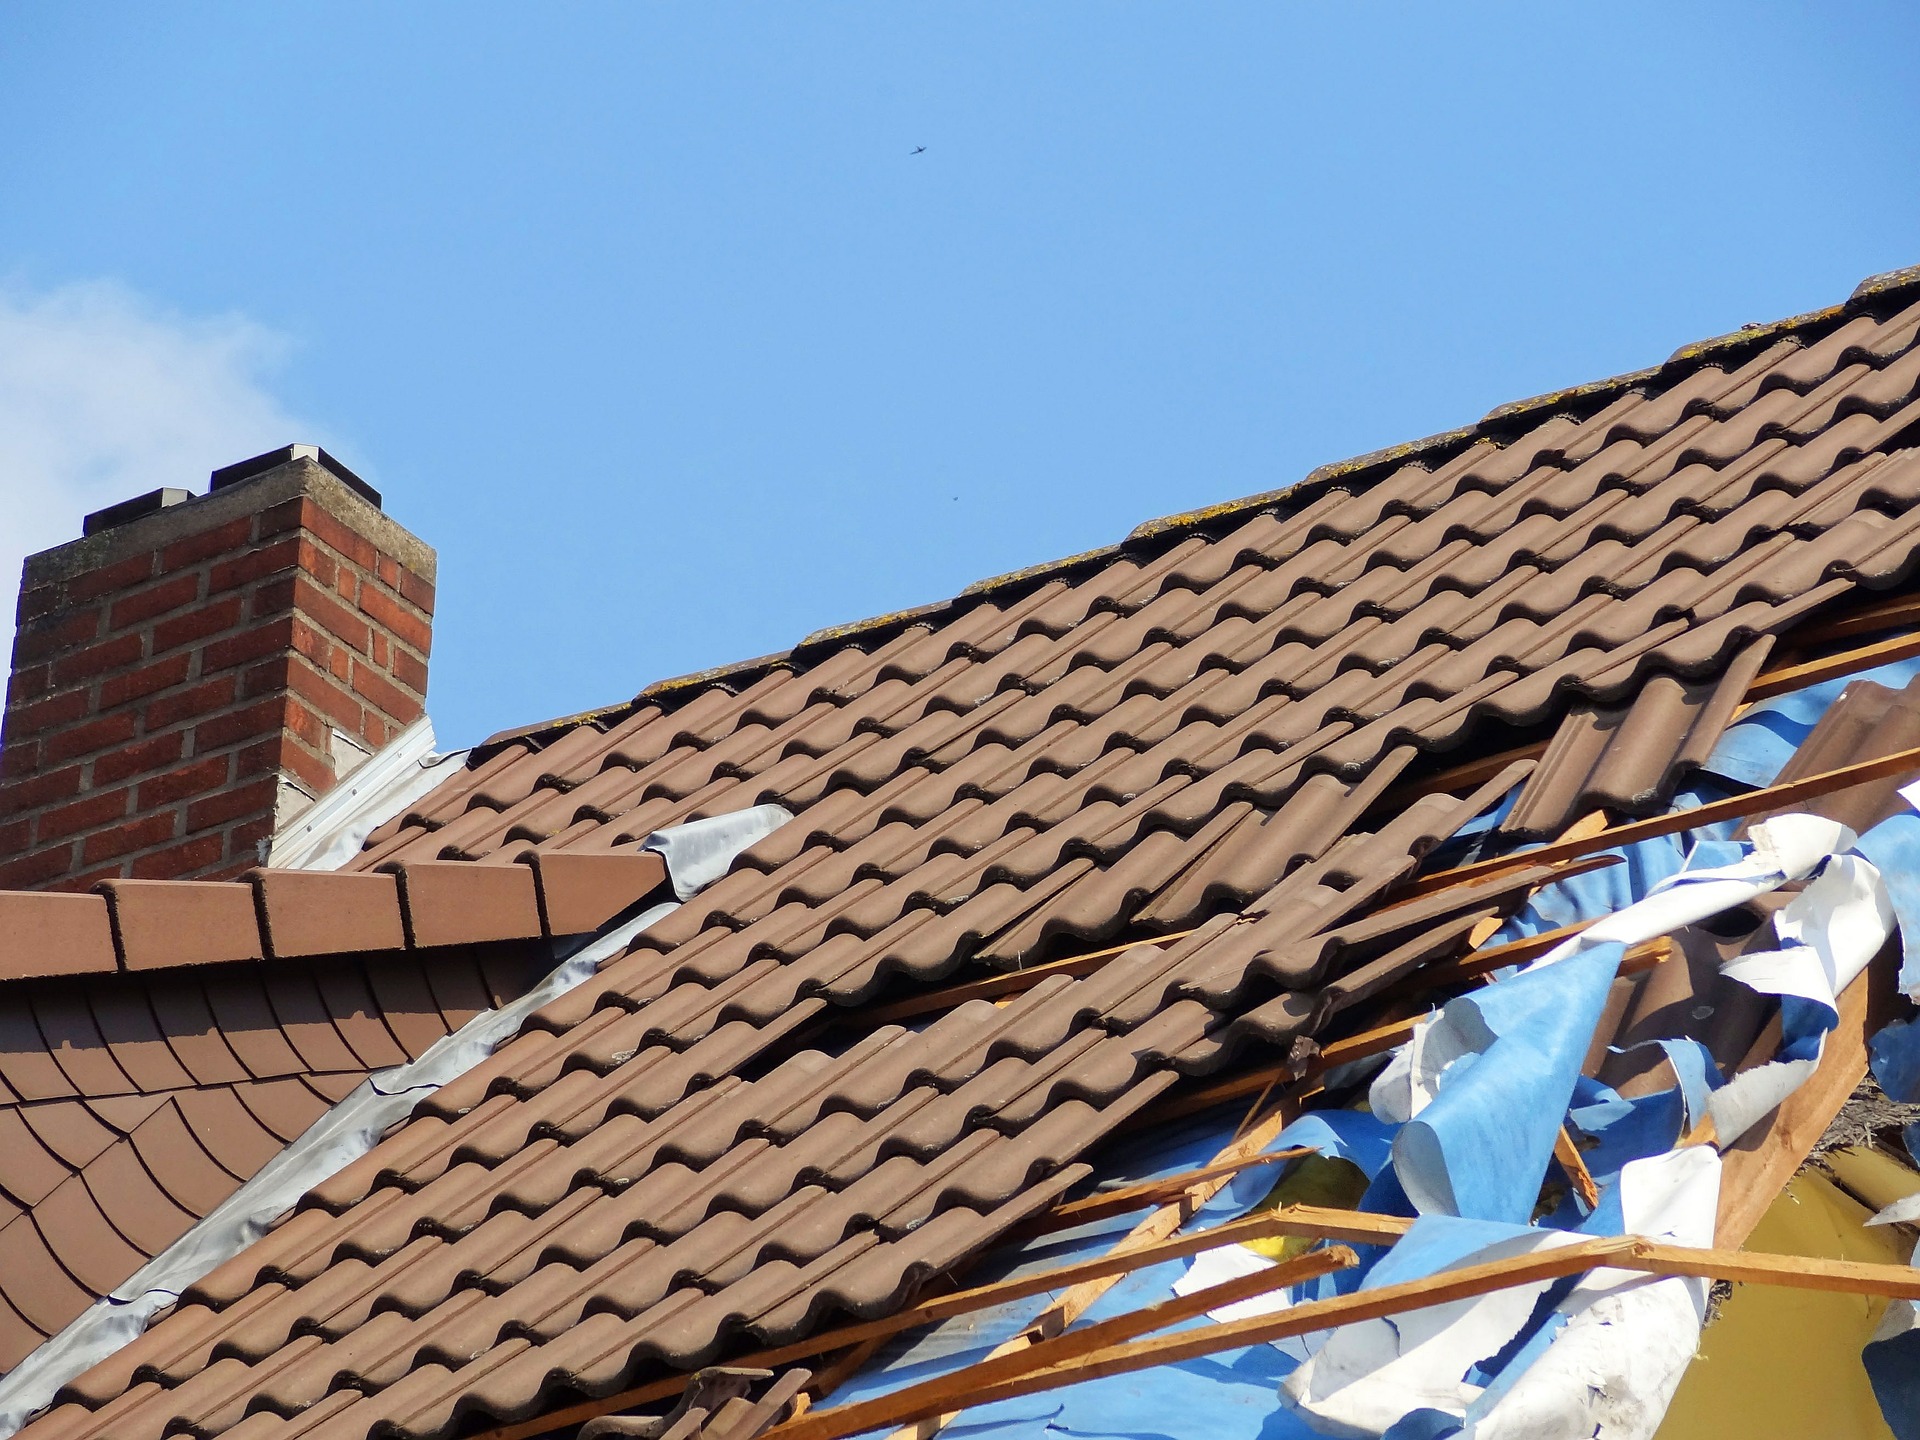 Storm Damage - Roof Tiles